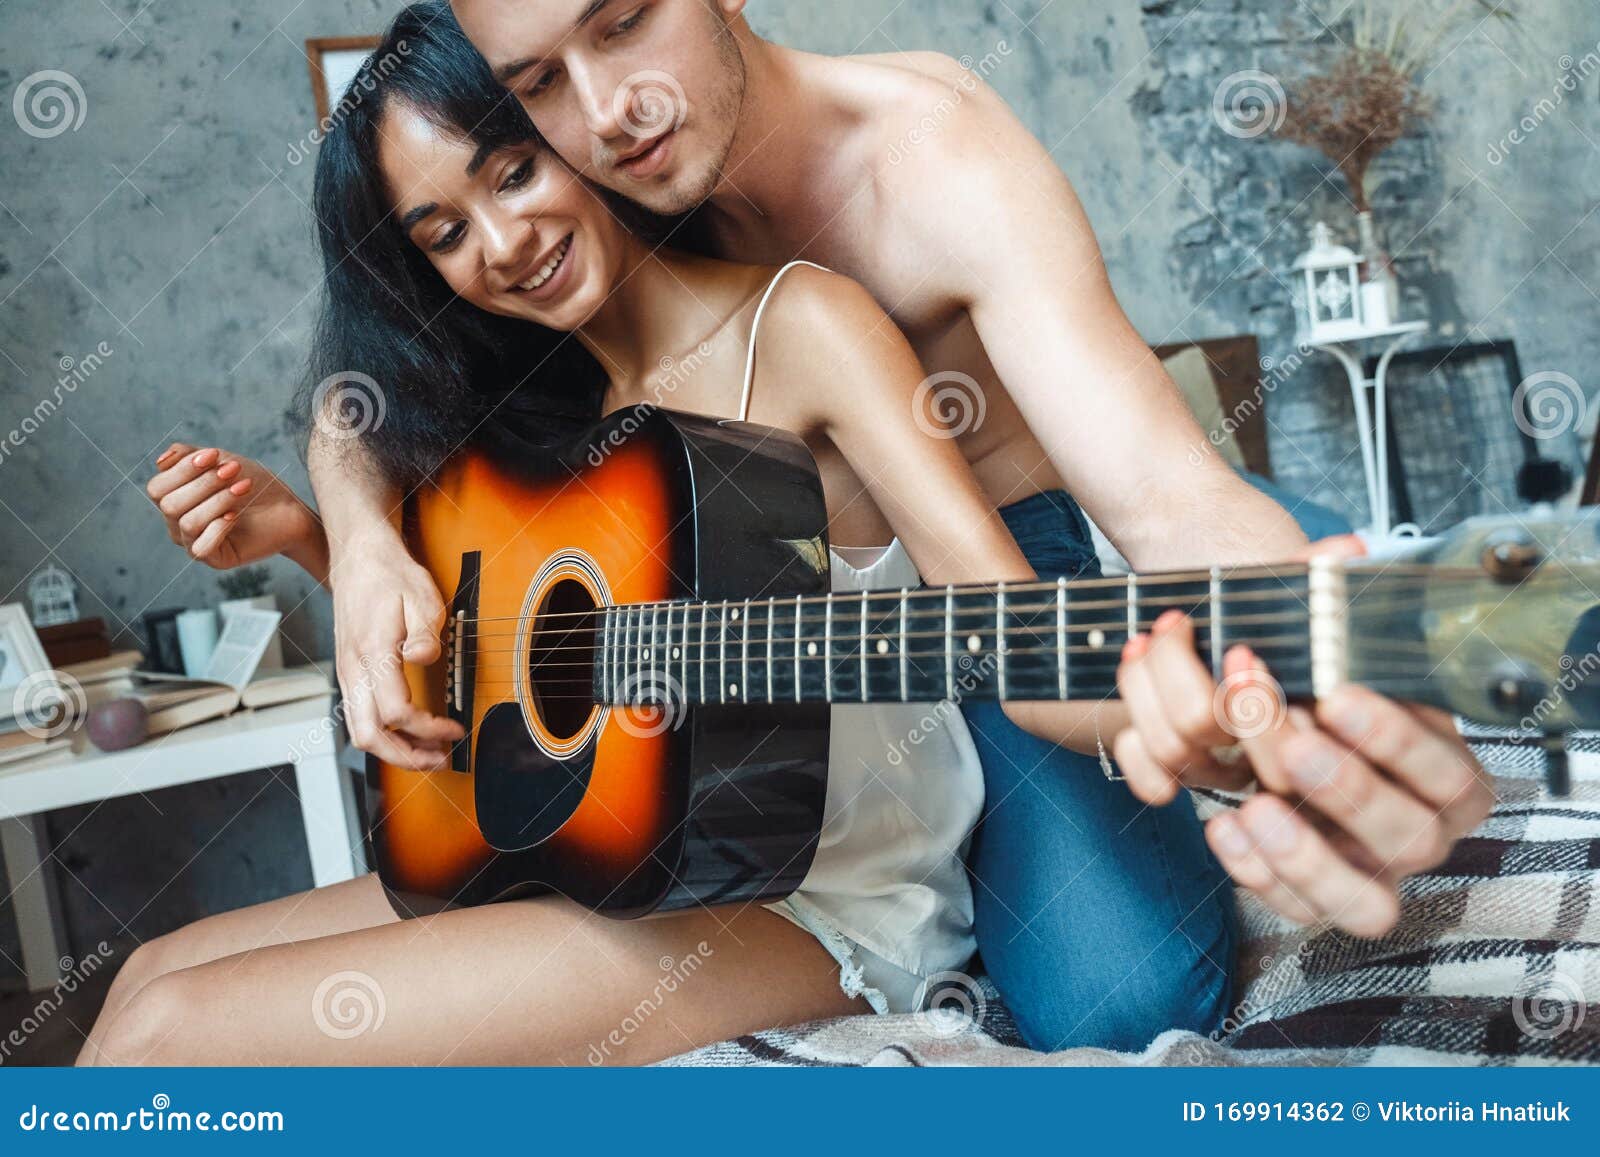 https://thumbs.dreamstime.com/z/pareja-de-razas-mixtas-joven-ense%C3%B1ando-una-mujer-que-toca-la-guitarra-sentada-en-cama-cerca-risa-juguetona-raza-mixta-novio-169914362.jpg